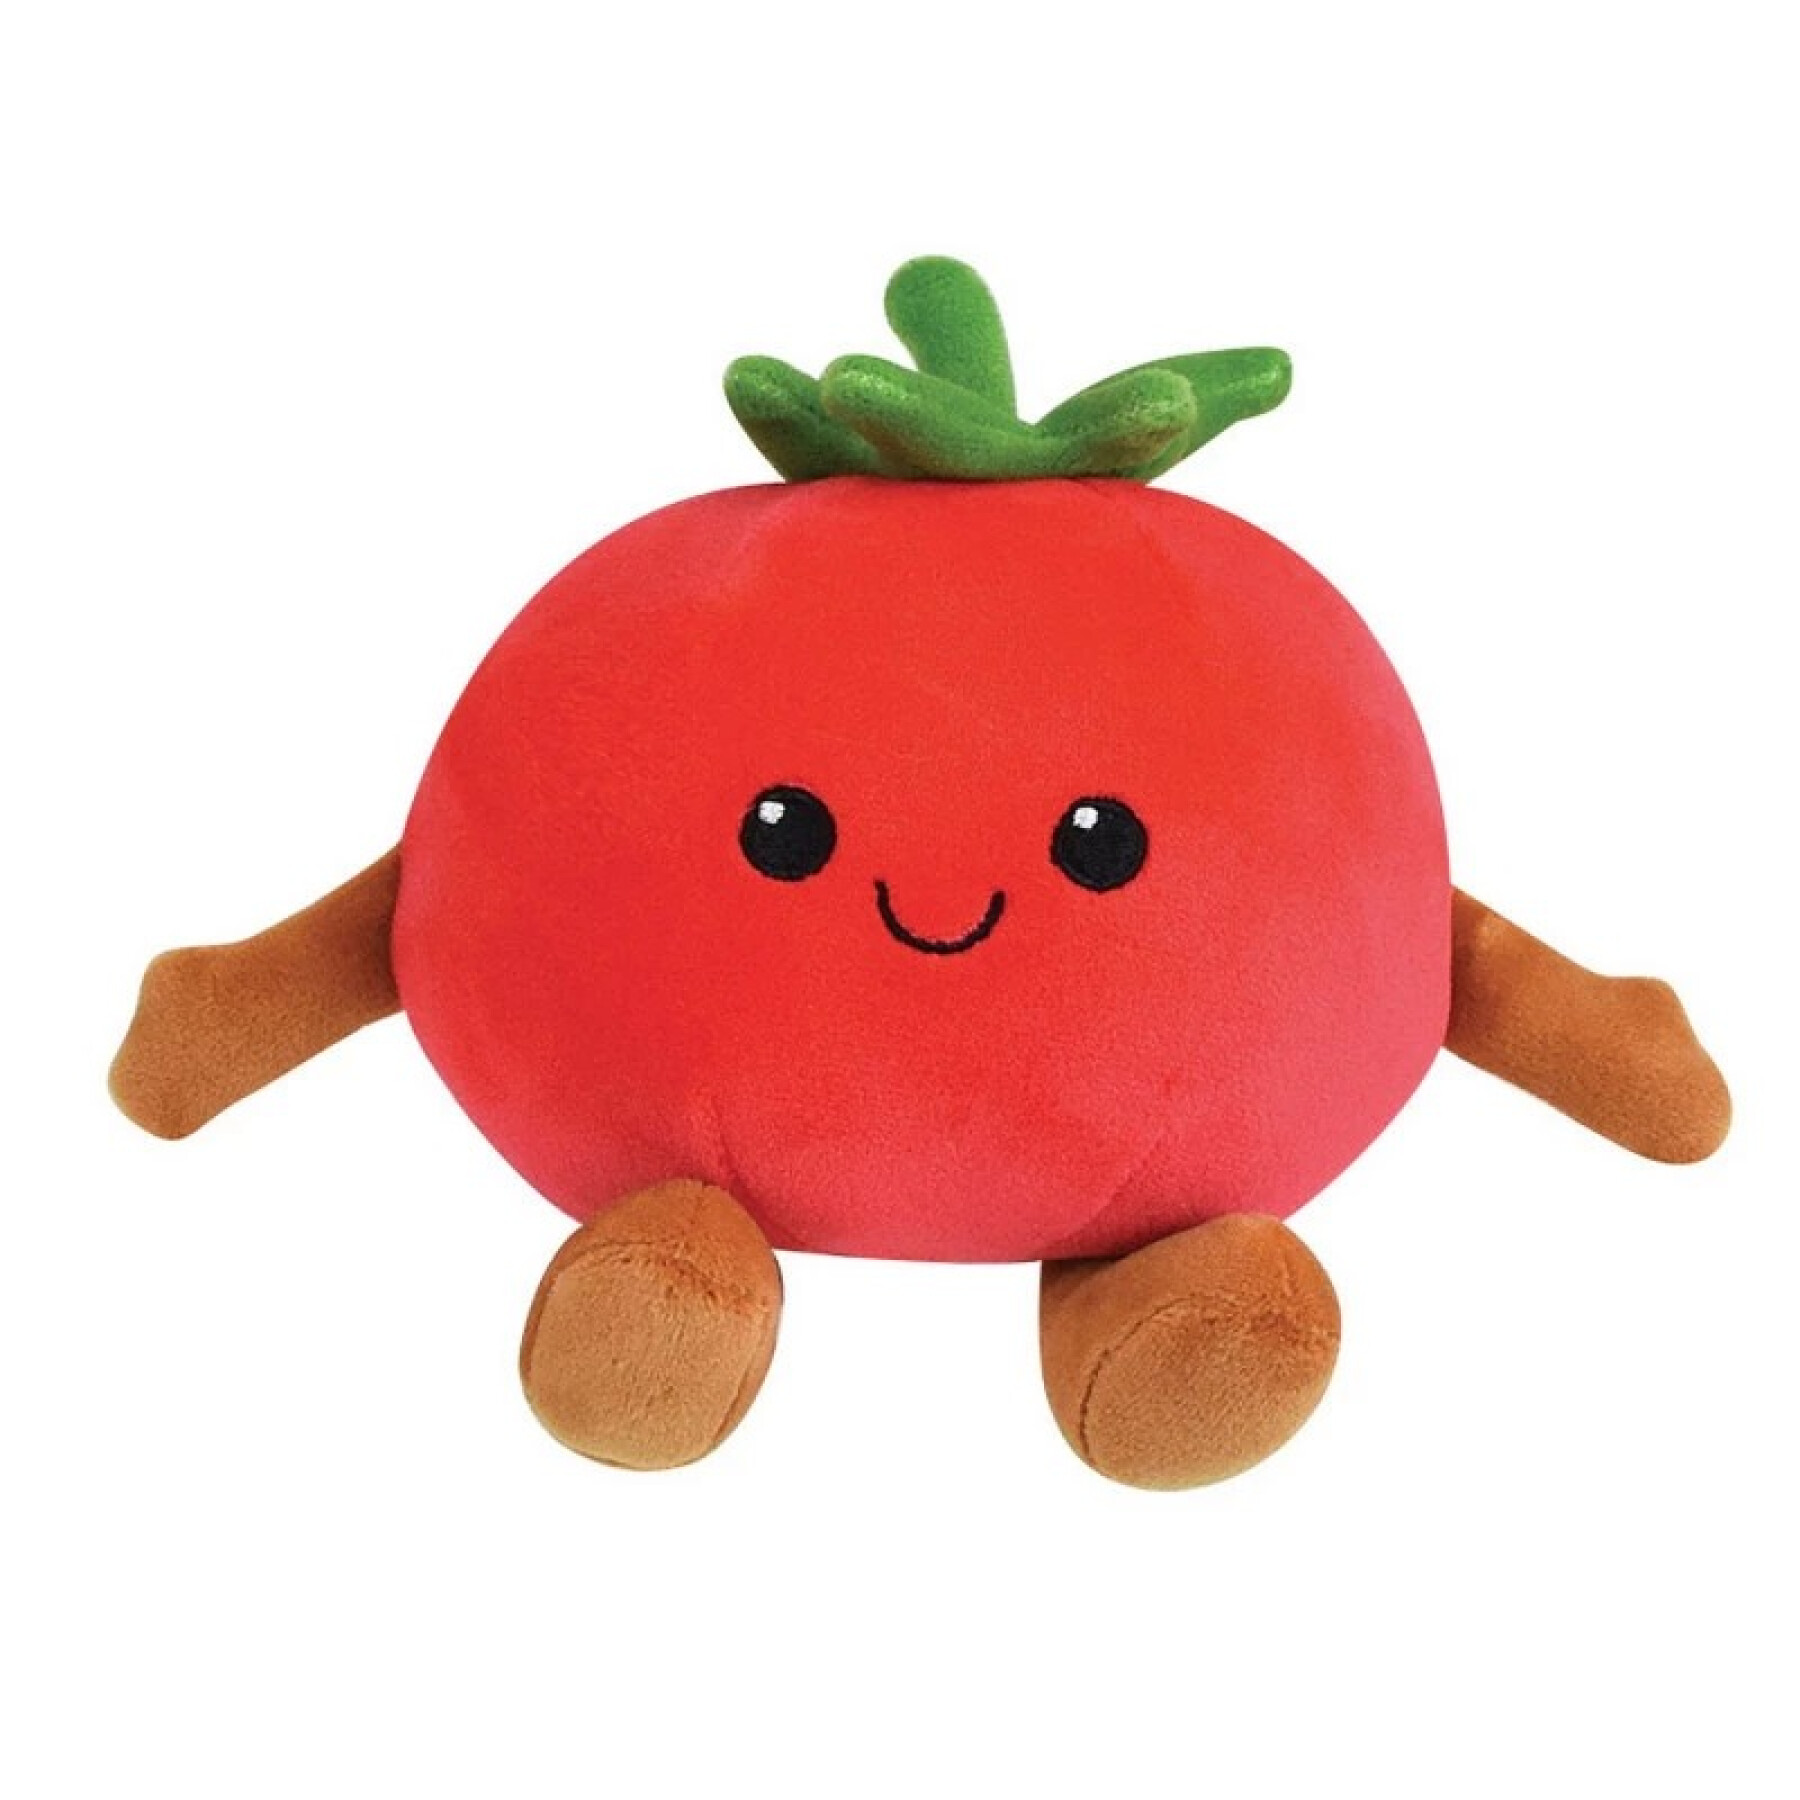 Tomato plush Jemini Fruity's Bean Bag